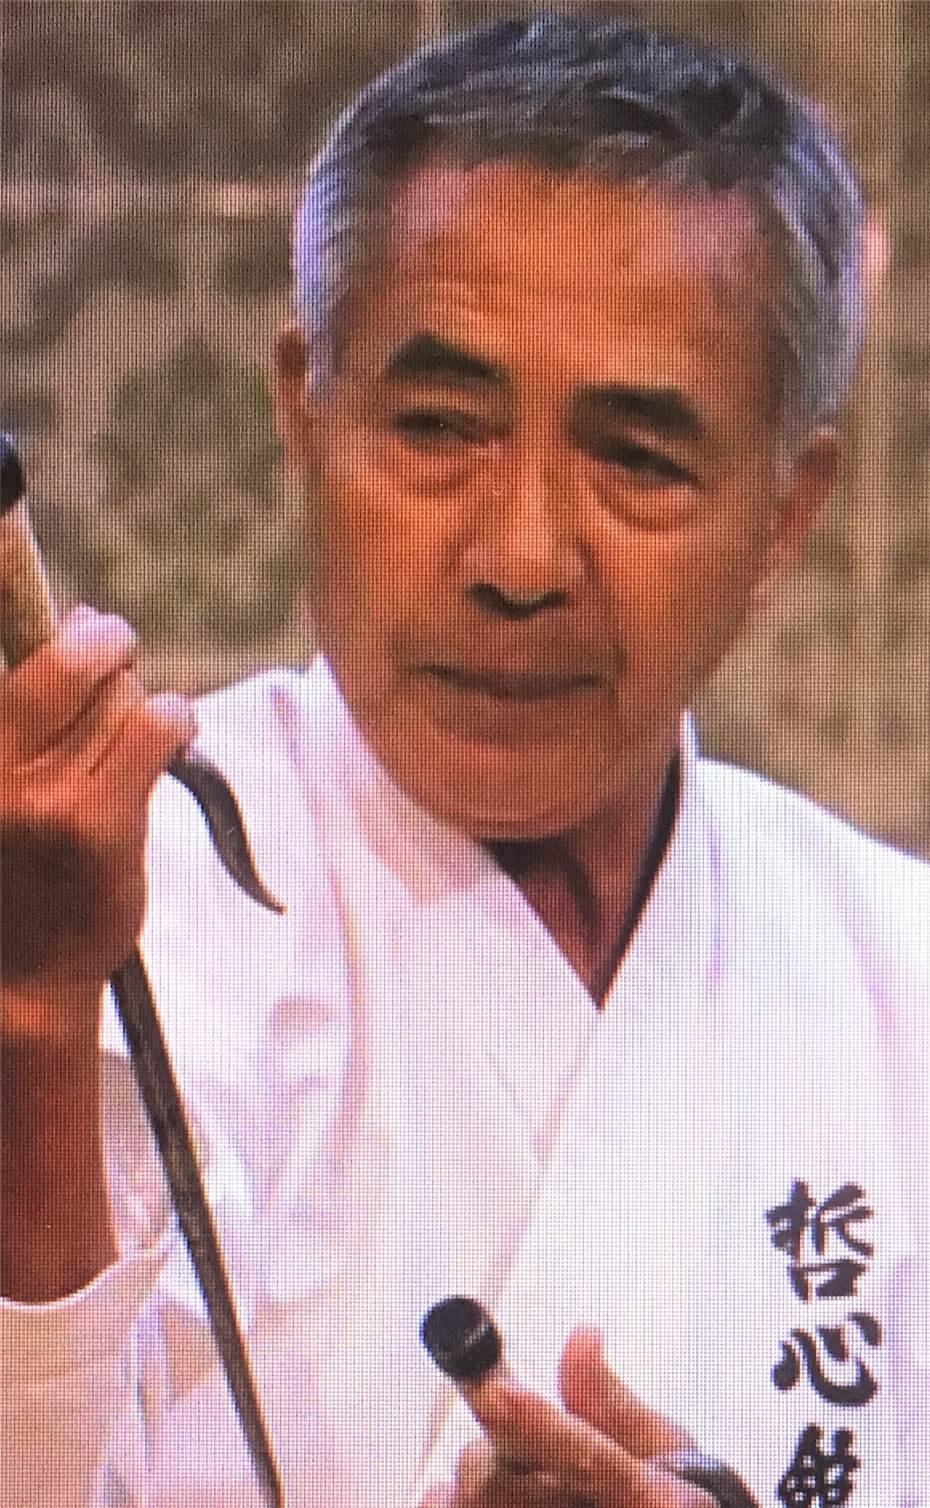 Japanischer Großmeister zu
Besuch bei Puderbacher Karatekas